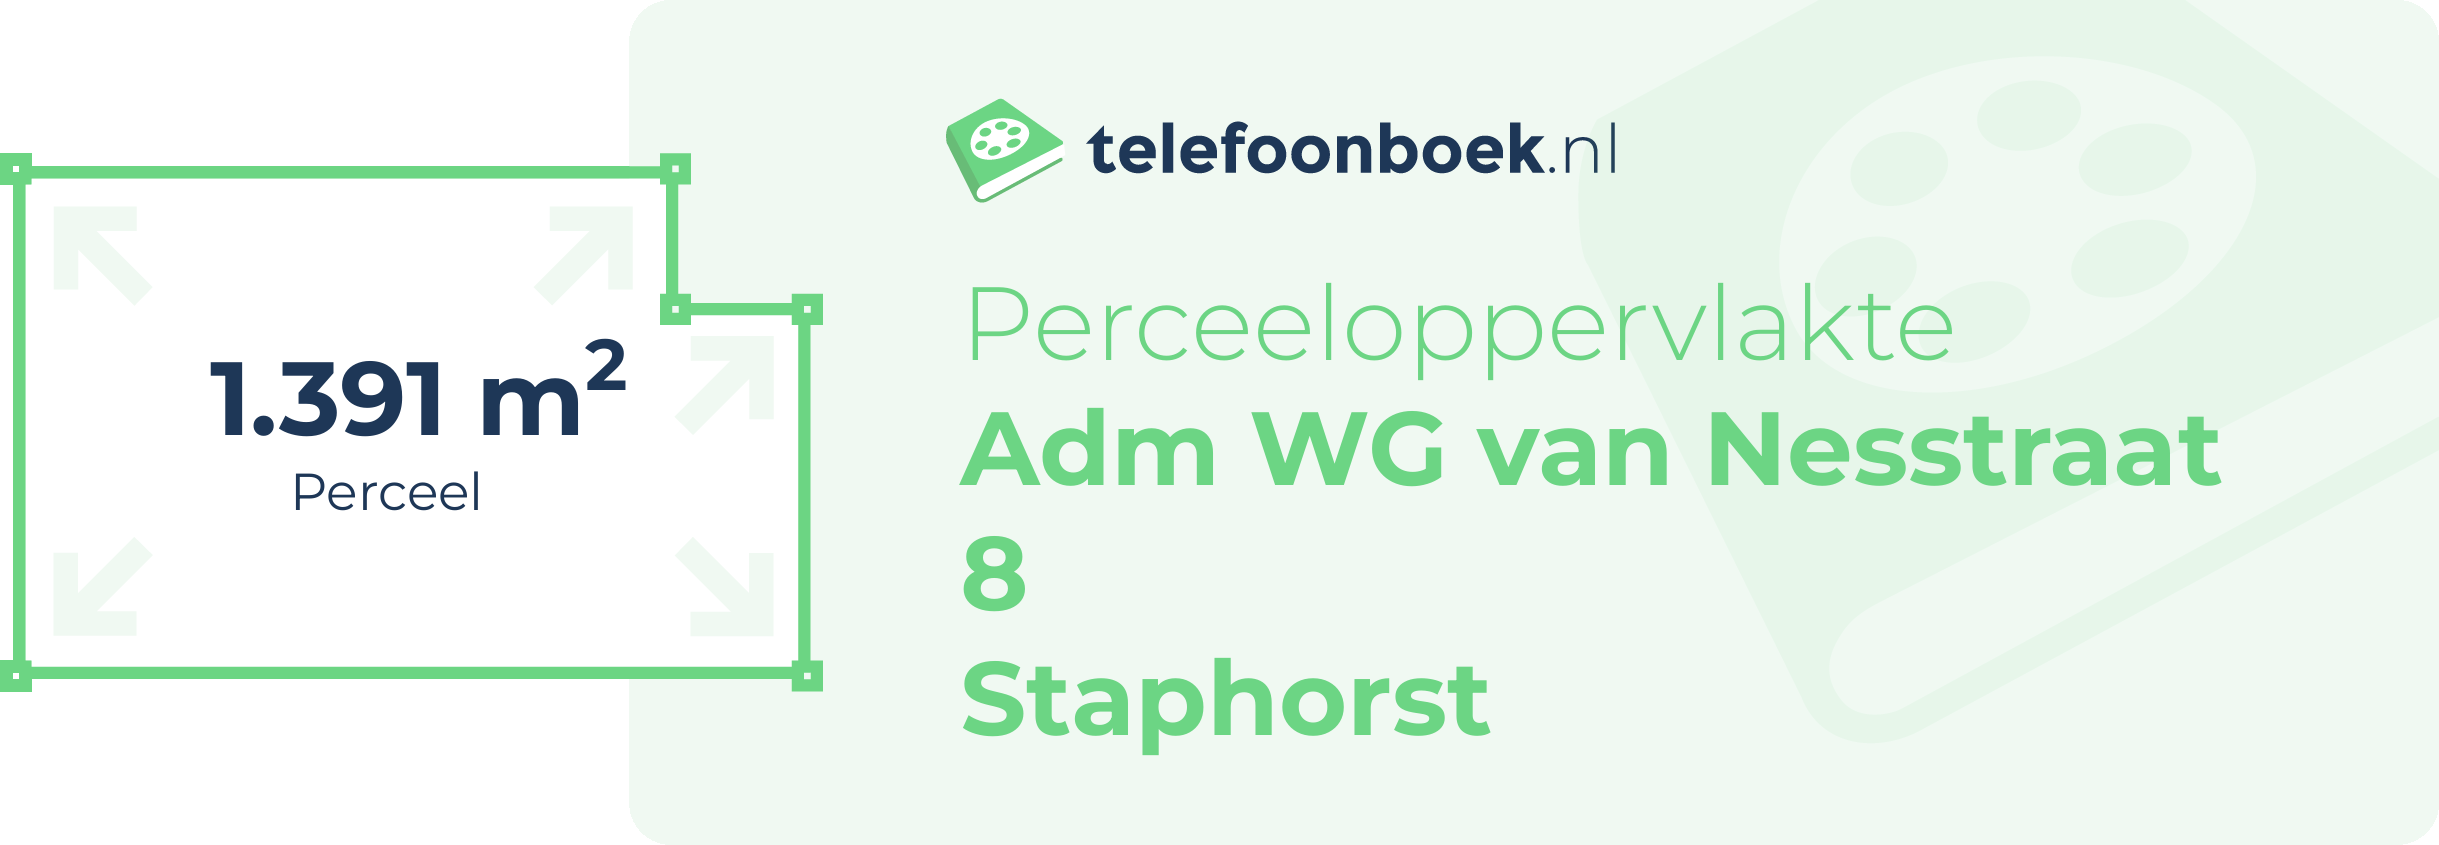 Perceeloppervlakte Adm WG Van Nesstraat 8 Staphorst